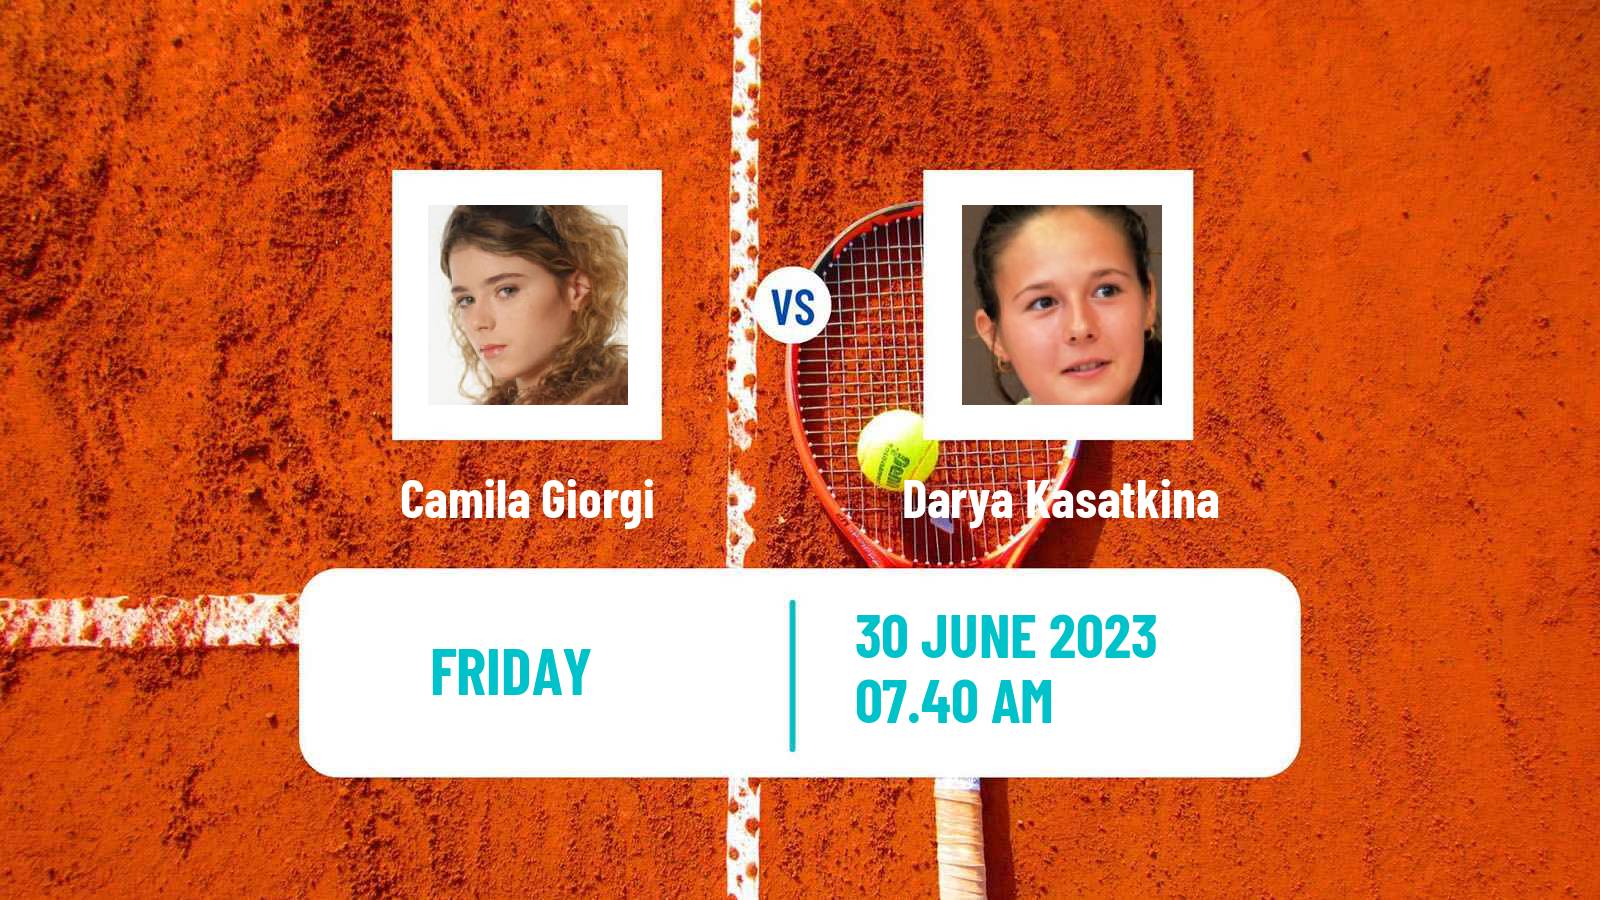 Tennis WTA Eastbourne Camila Giorgi - Darya Kasatkina